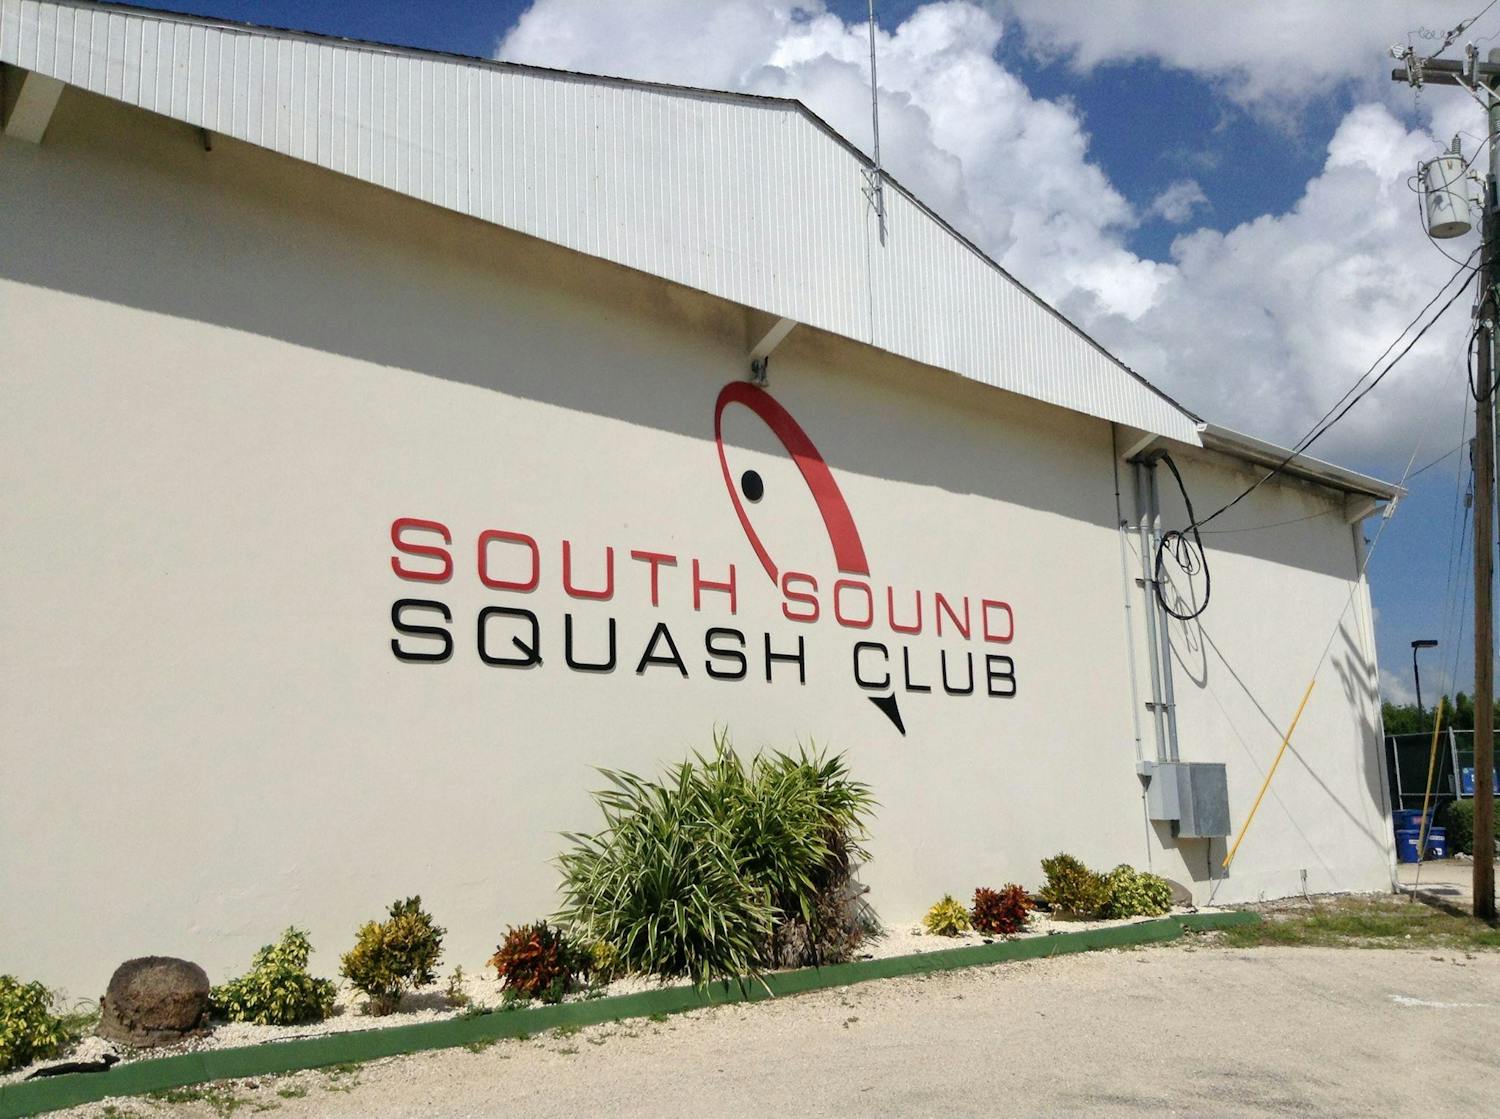 Beige exterior of the south sound squash club building